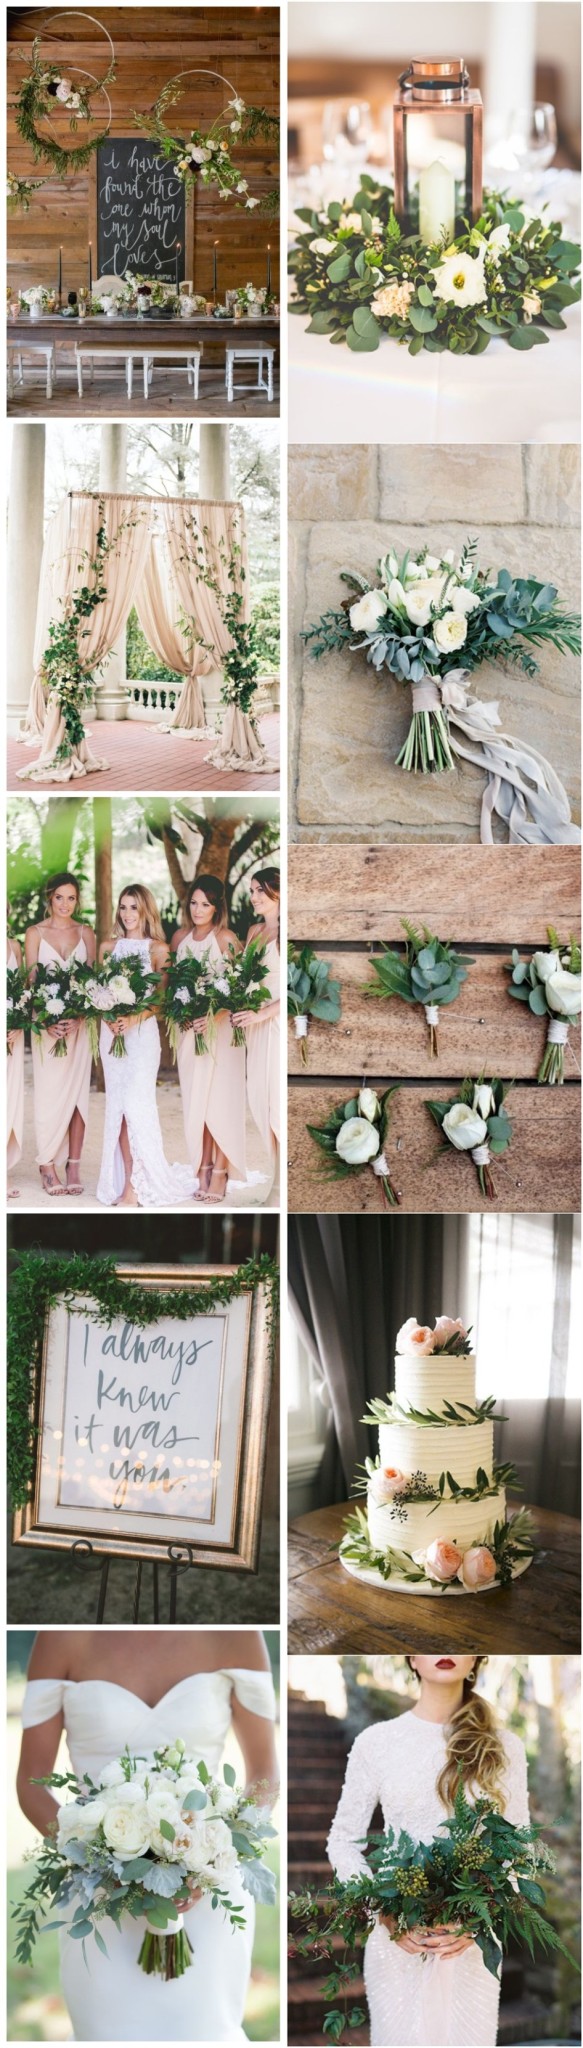 Greenery wedding color ideas 2017